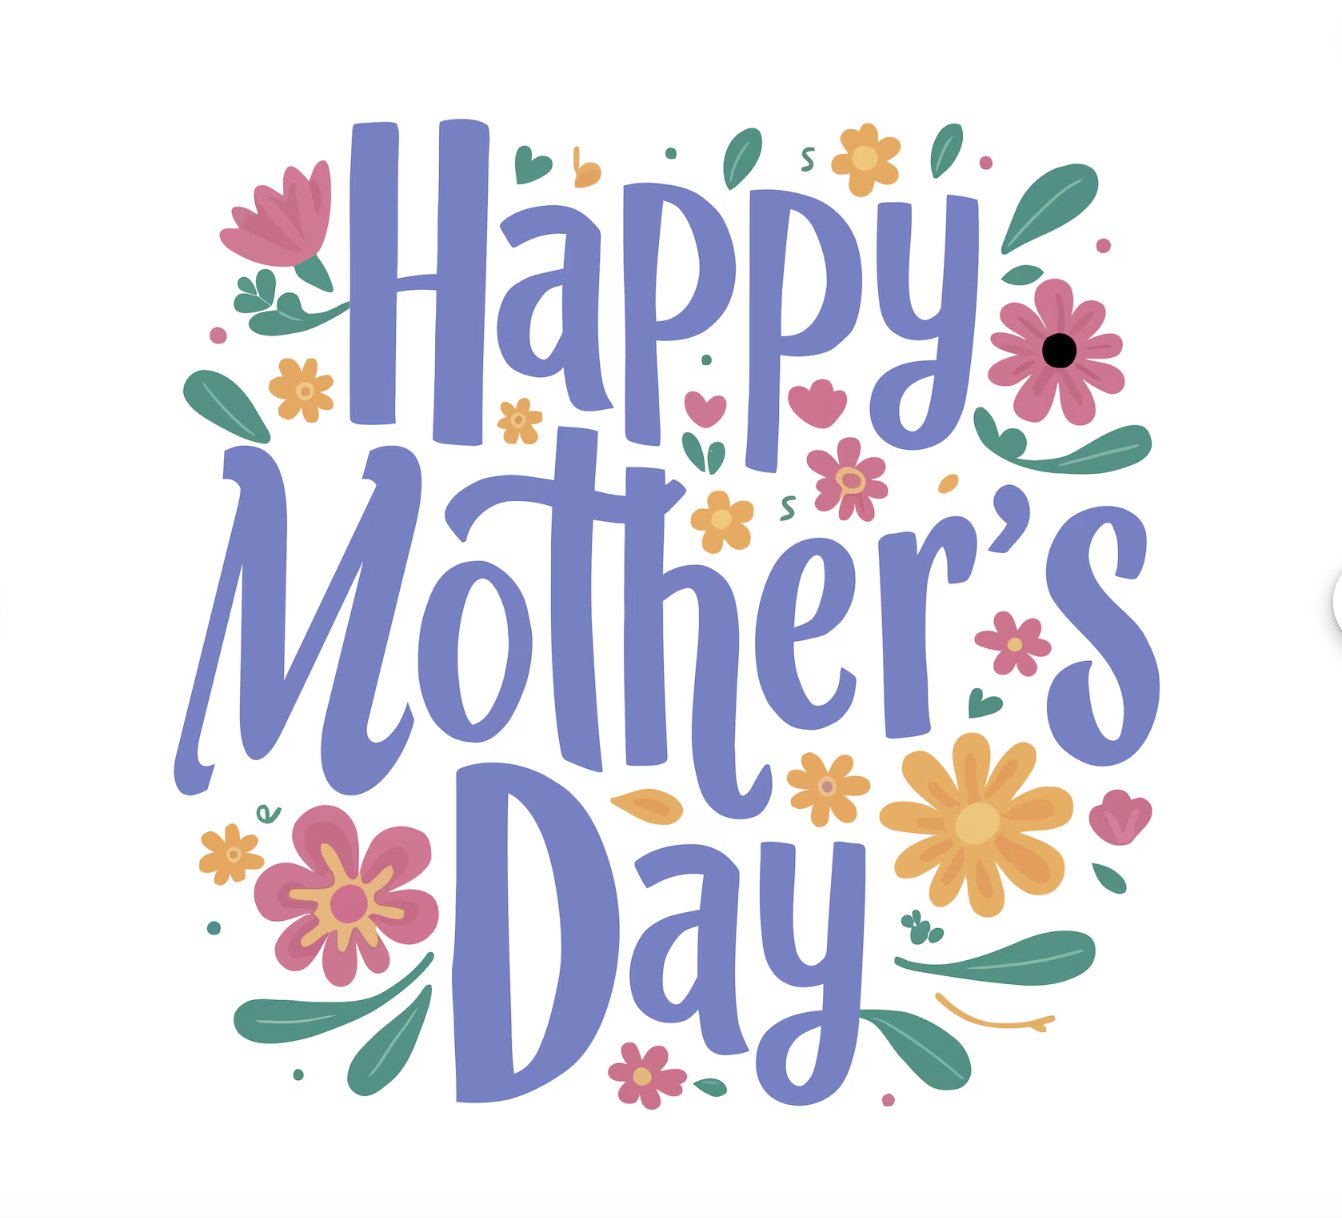 Wishing a Happy Mother's Day to all! #hullma #hullmanews #nantasket #MALocalNews #hulltimes #southshorenews